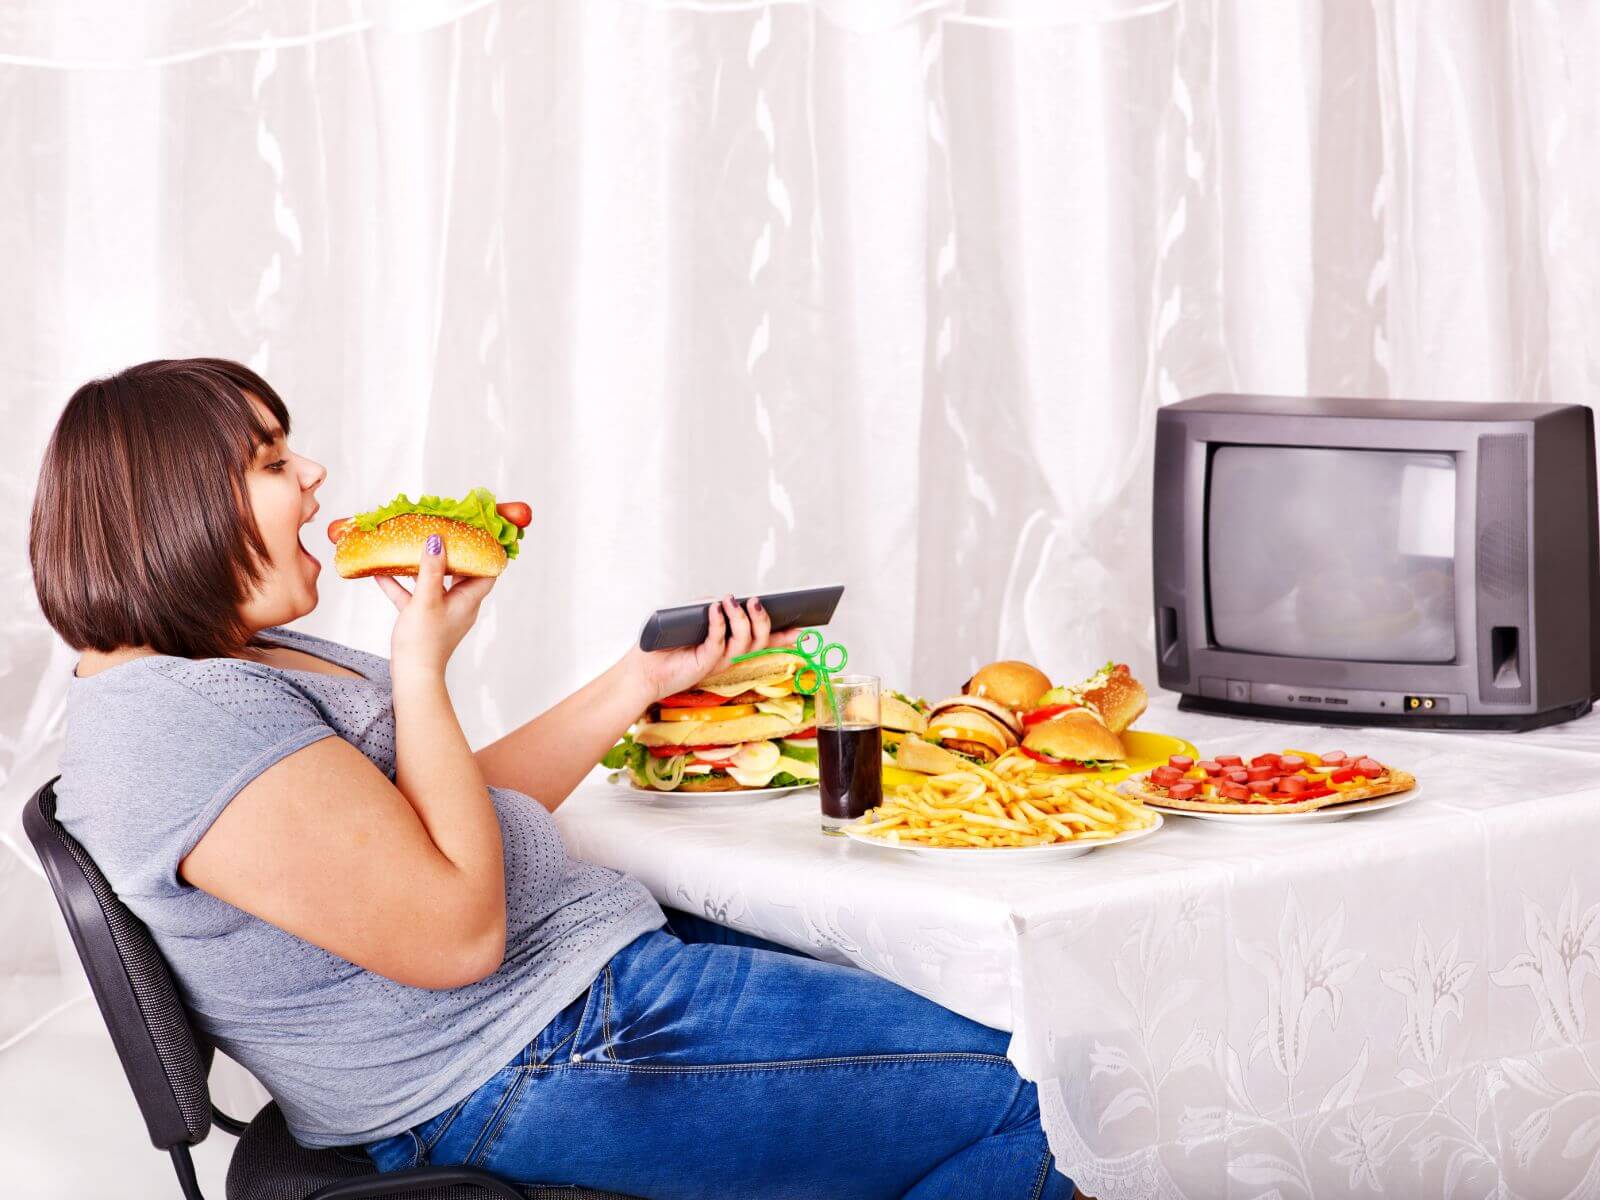 Постоянно смотрит телевизор. Женщина перед телевизором. Еда перед телевизором. Нда перед телевизором. Человек ест перед телевизором.